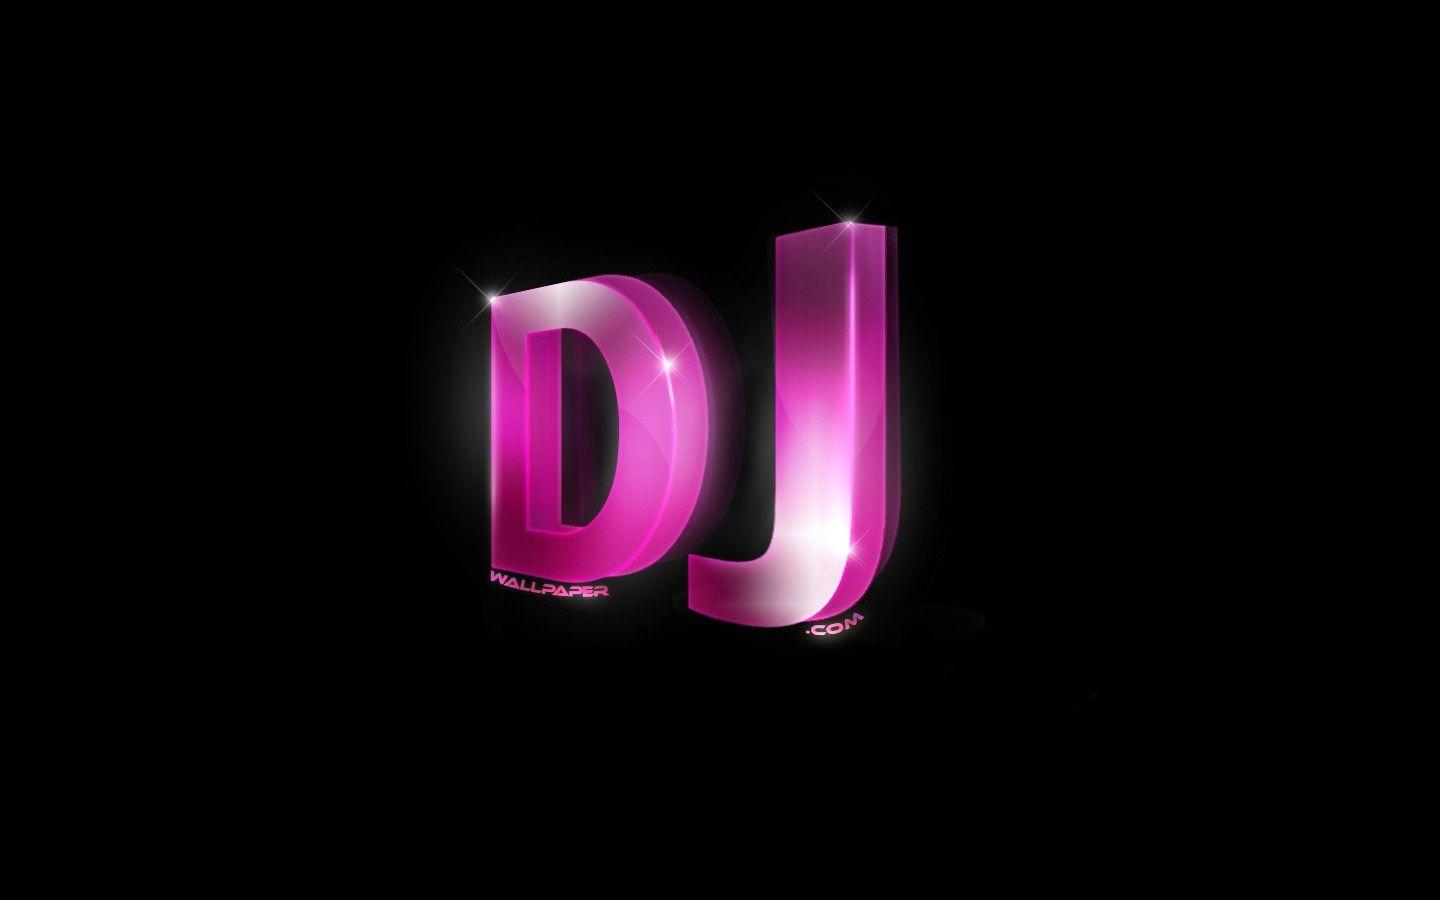 Dj Logo Wallpapers Desktop HD - Wallpaper Cave